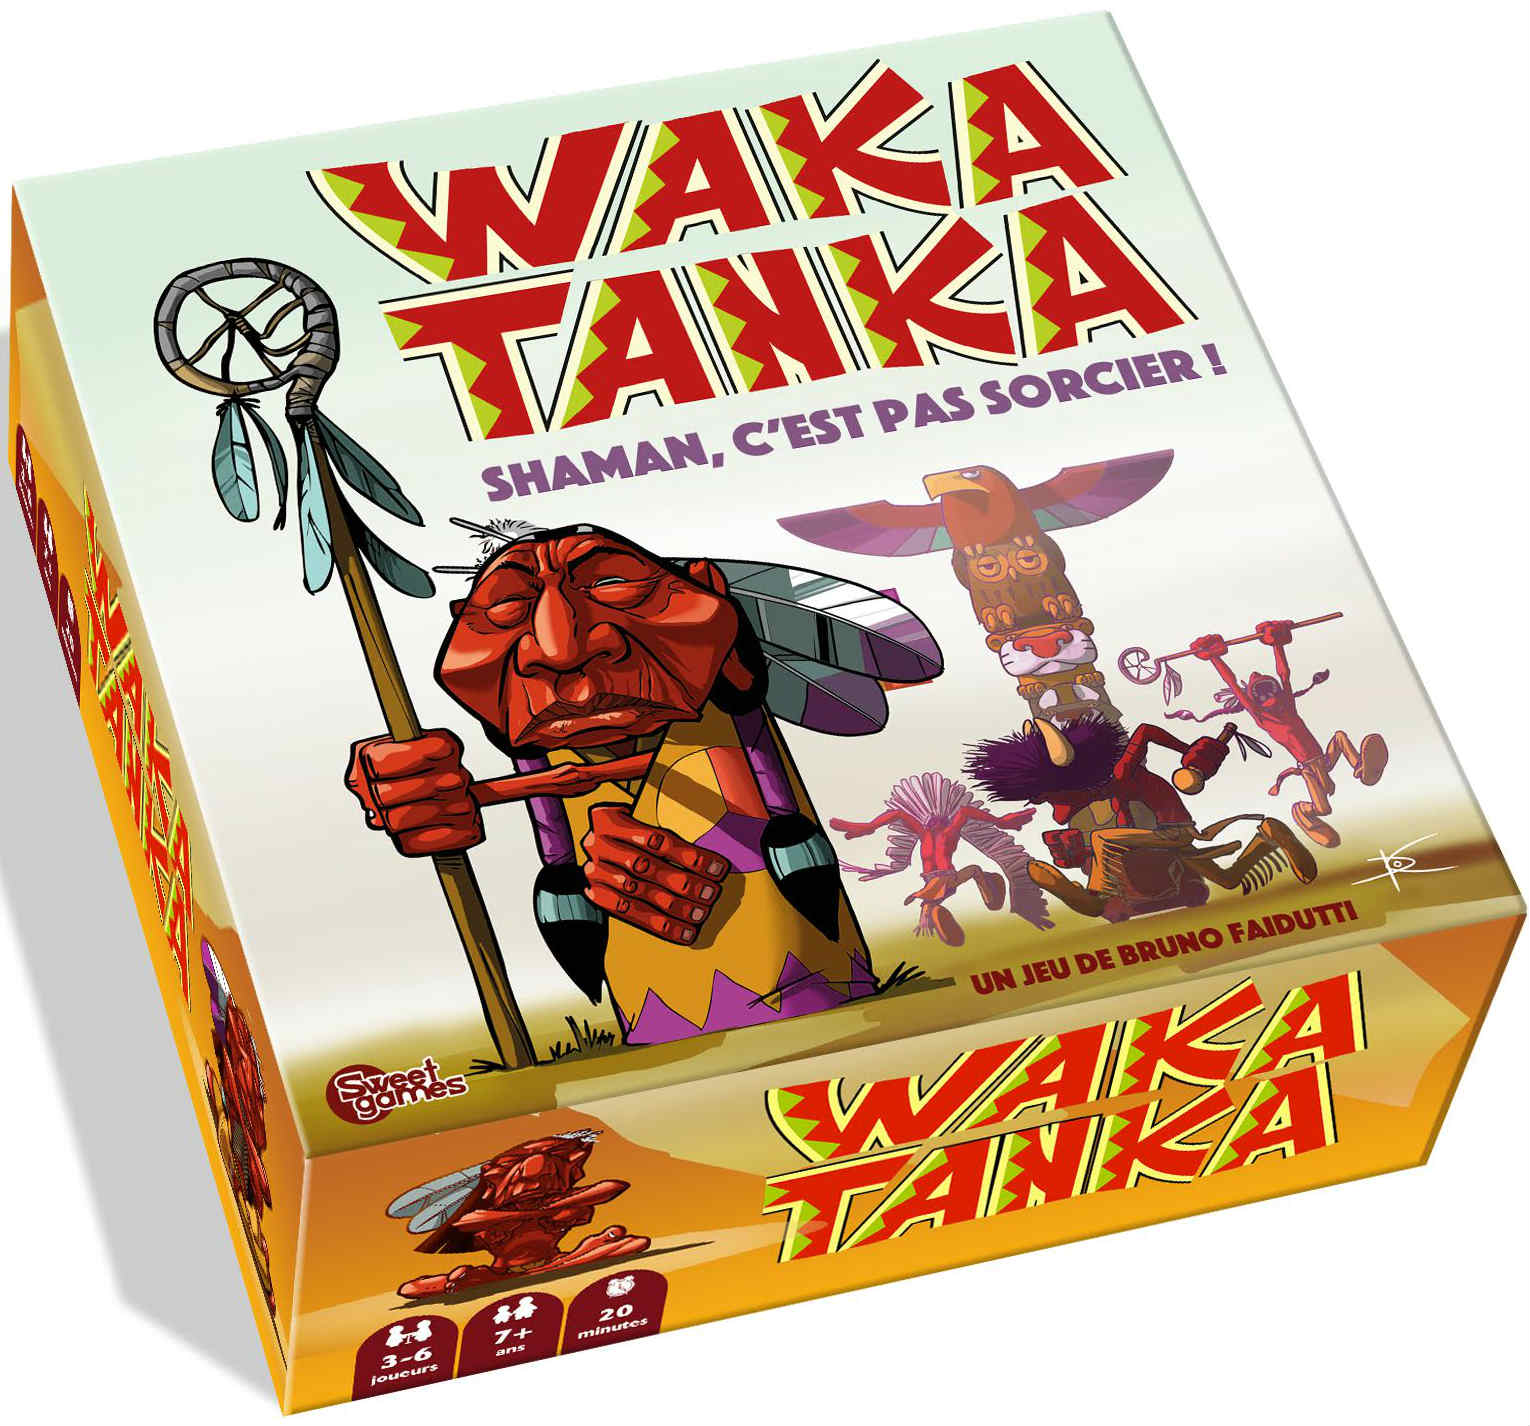 Boîte du jeu Waka Tanka